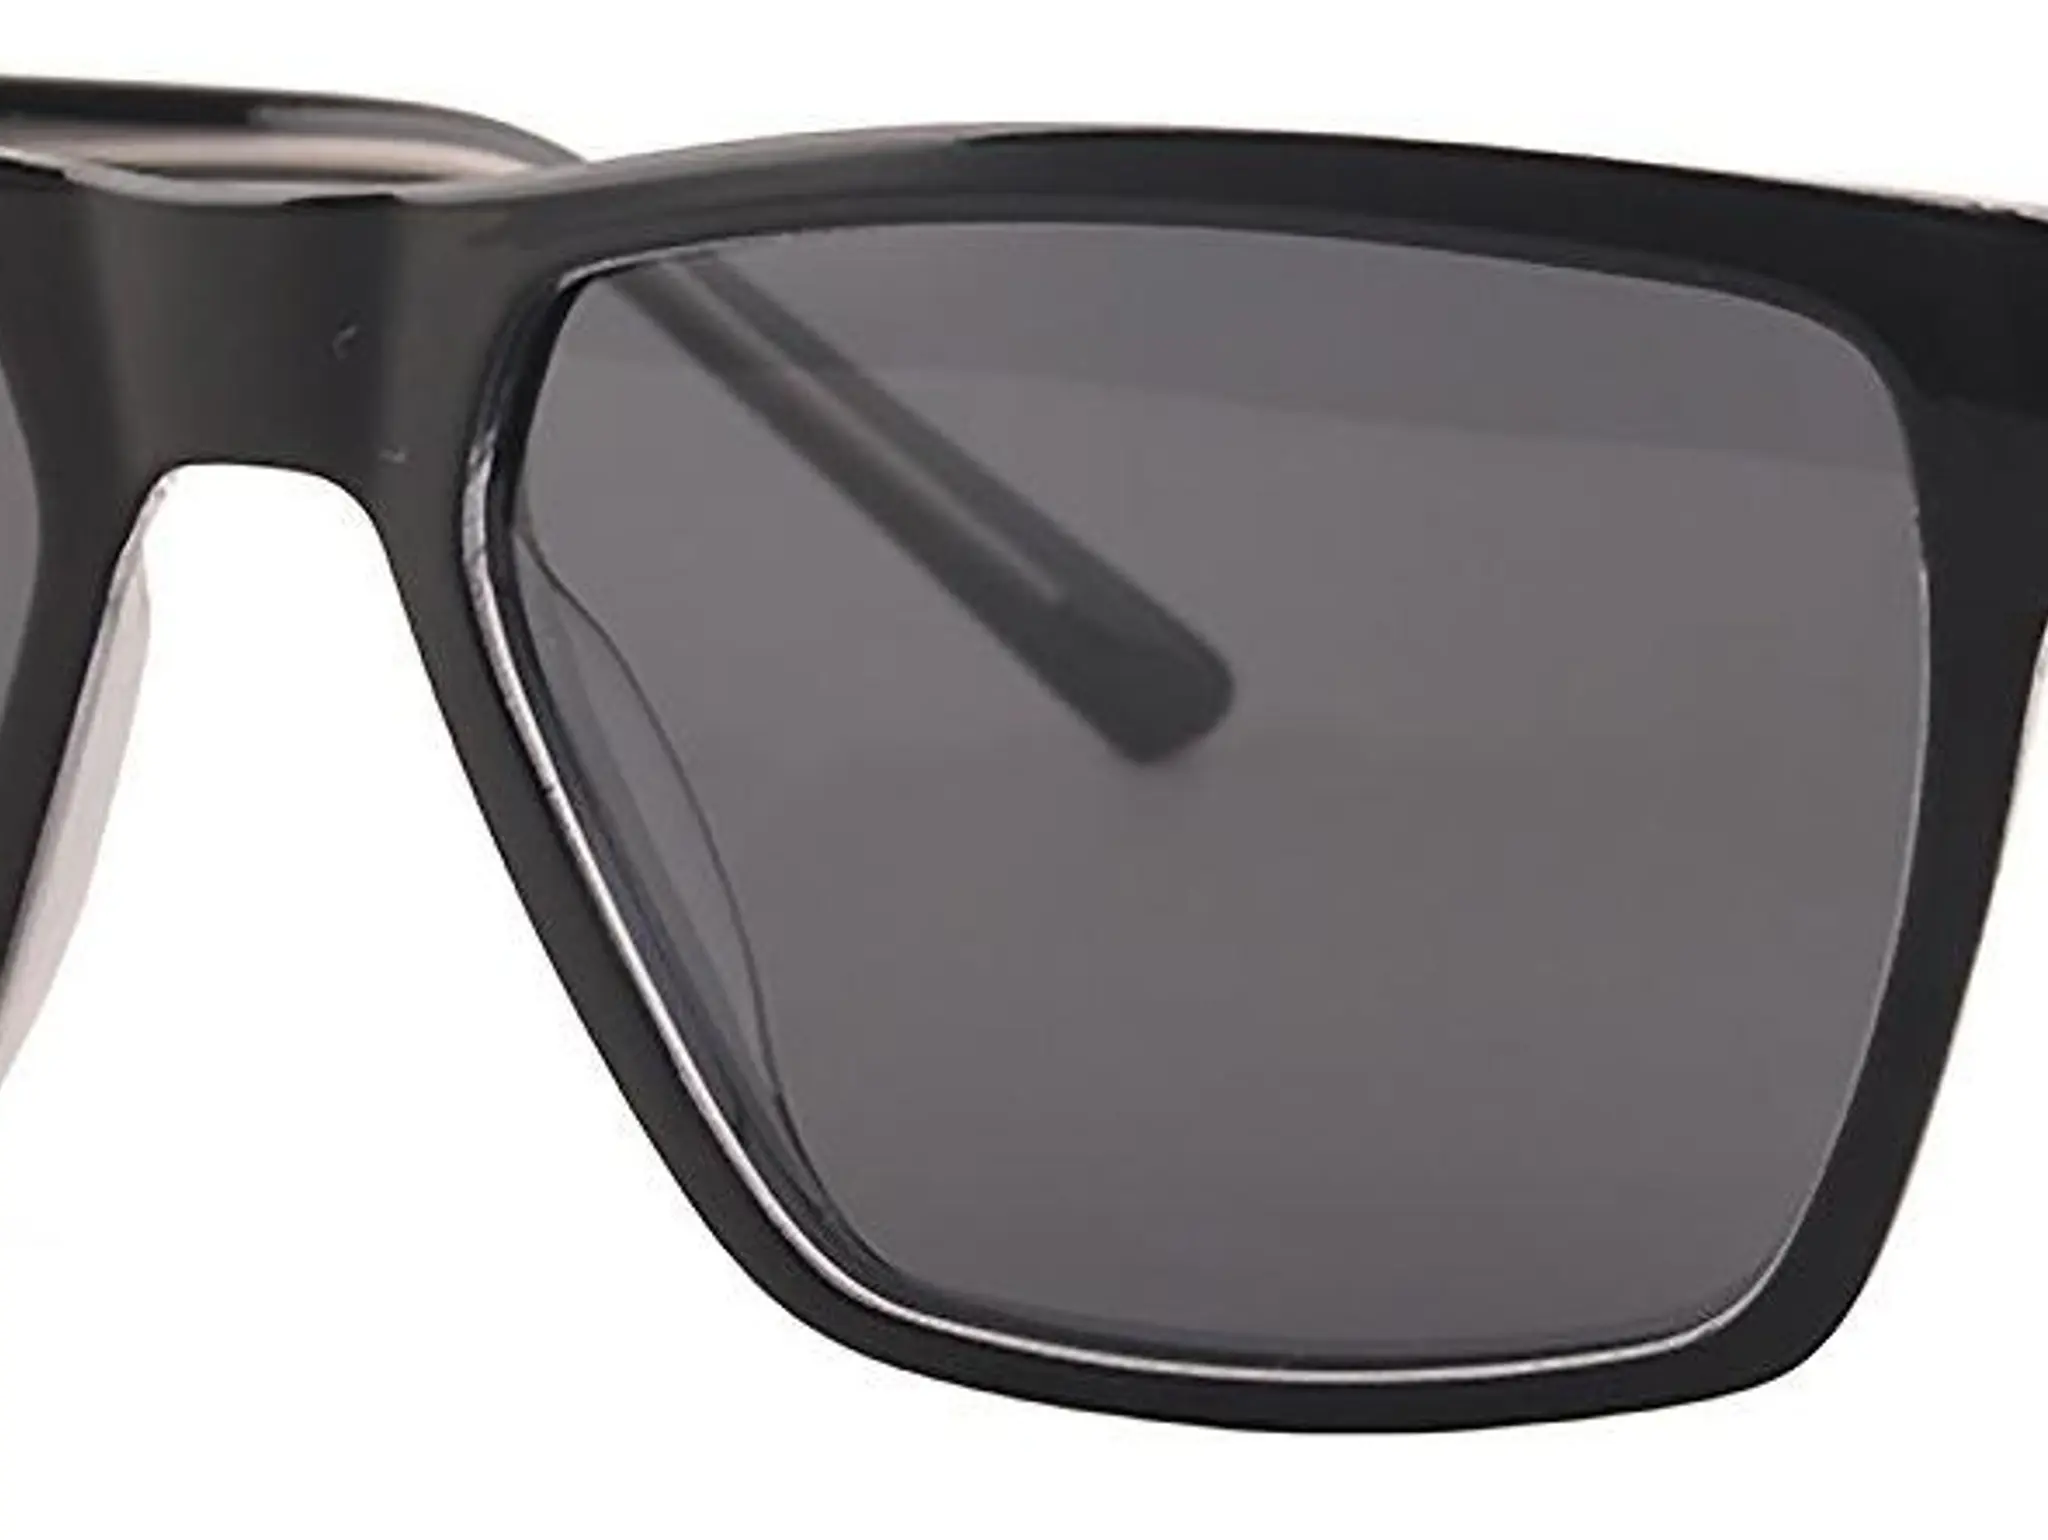 Rx-able Sunglasses